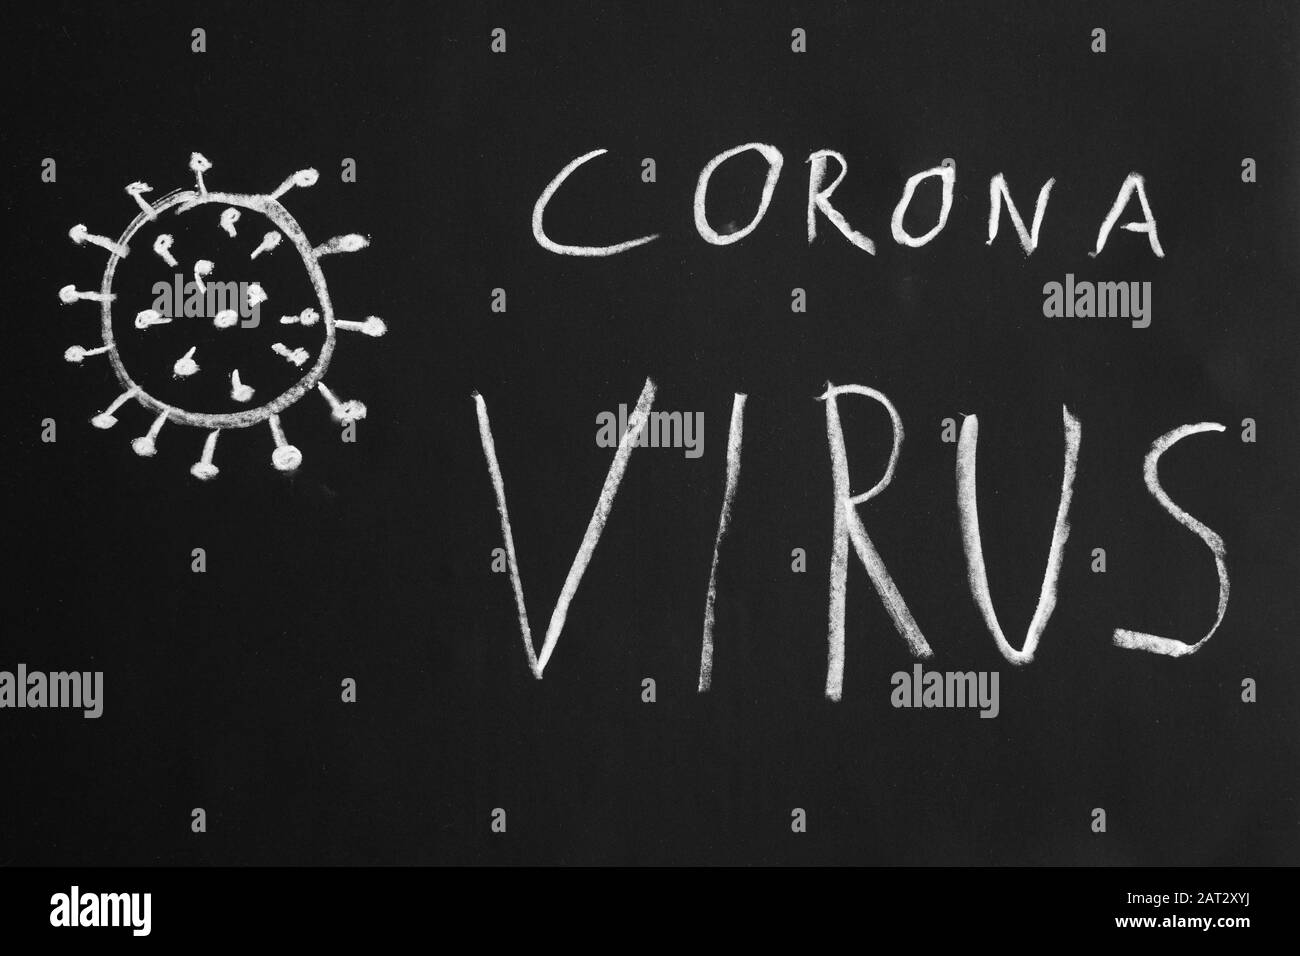 Corona virus hand-drawn text and simple illustration with chalk on blackboard Stock Photo